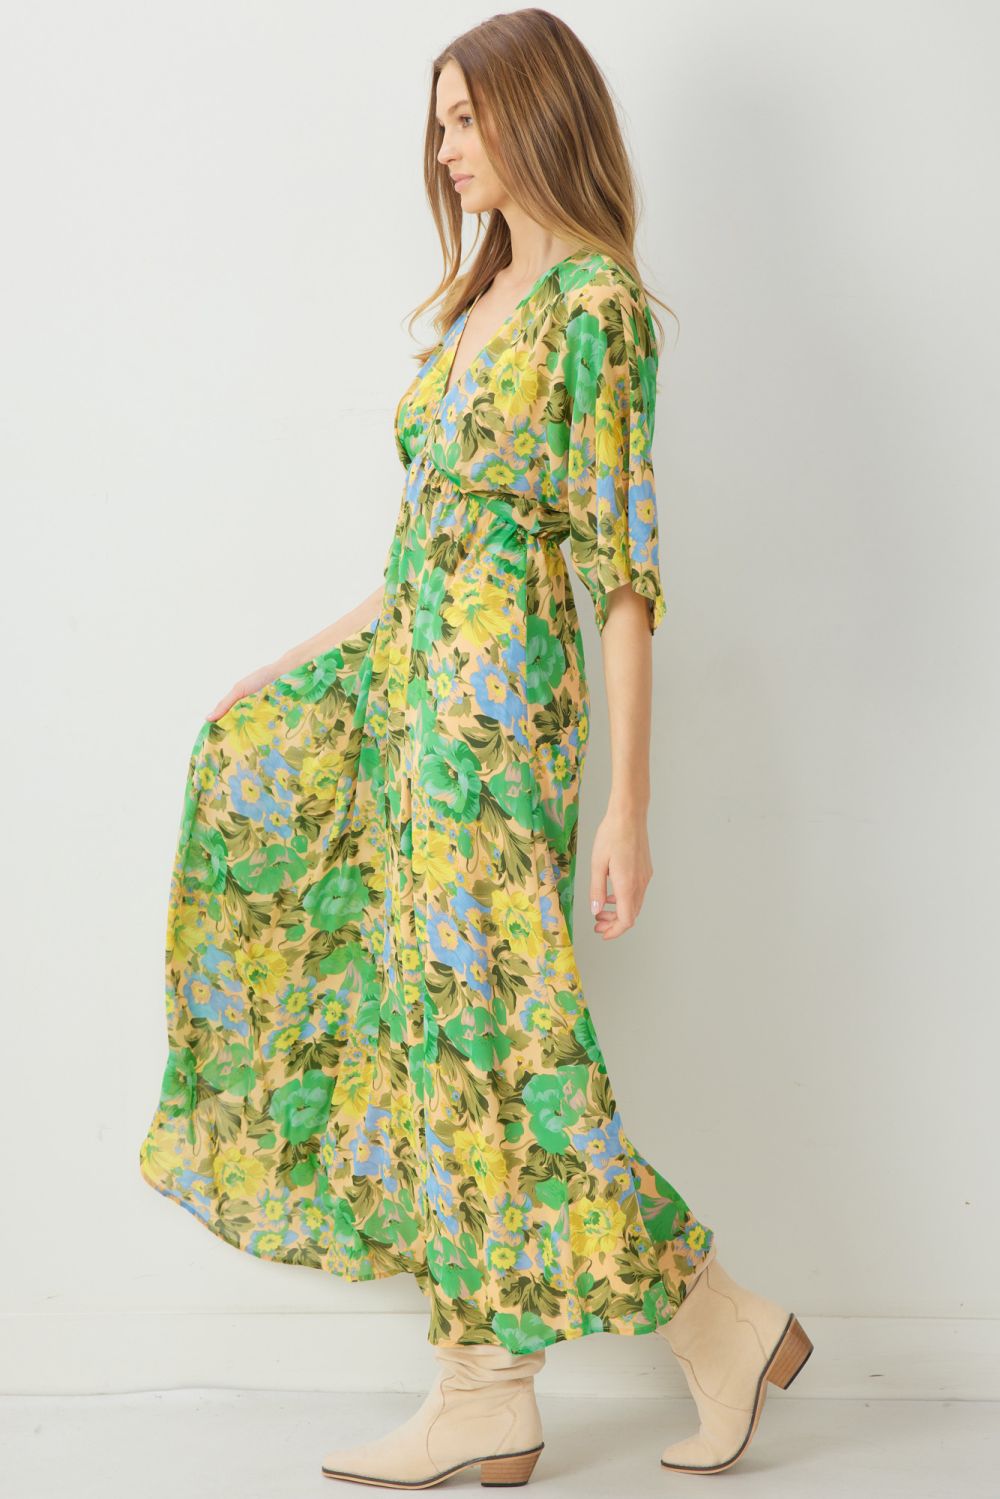 SALE Floral Print deep v-neck 1/2 sleeve maxi dress